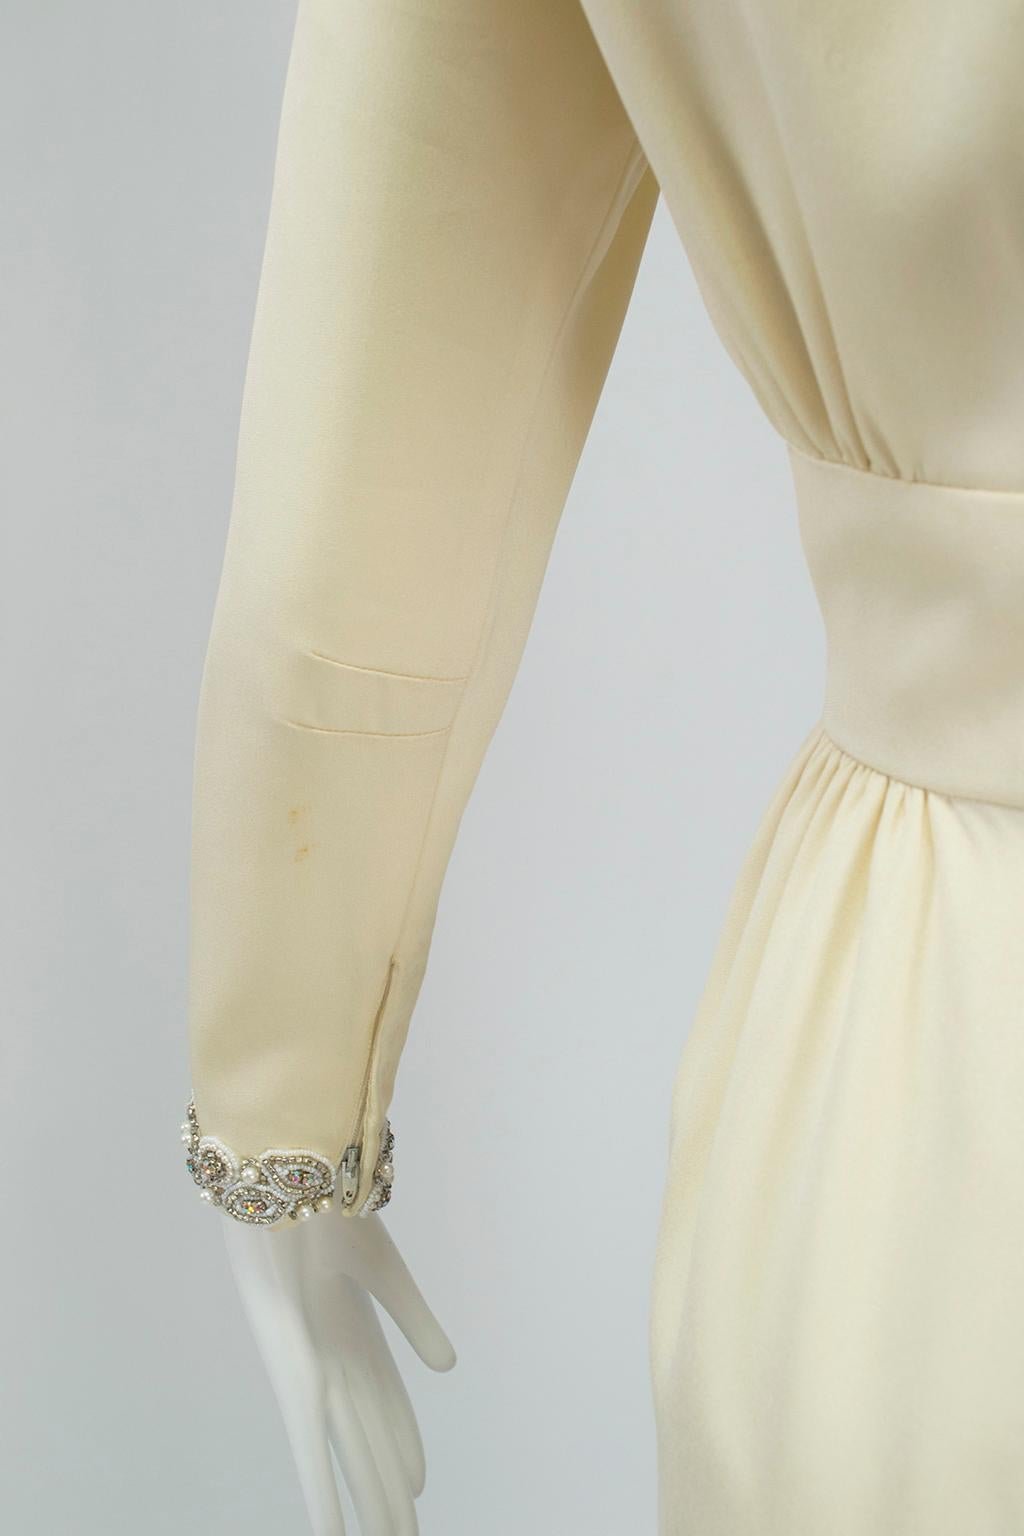 Byzantine Cream Jeweled Silk Modesty-Dressing Panel Skirt Wedding Gown – M, 1968 For Sale 2